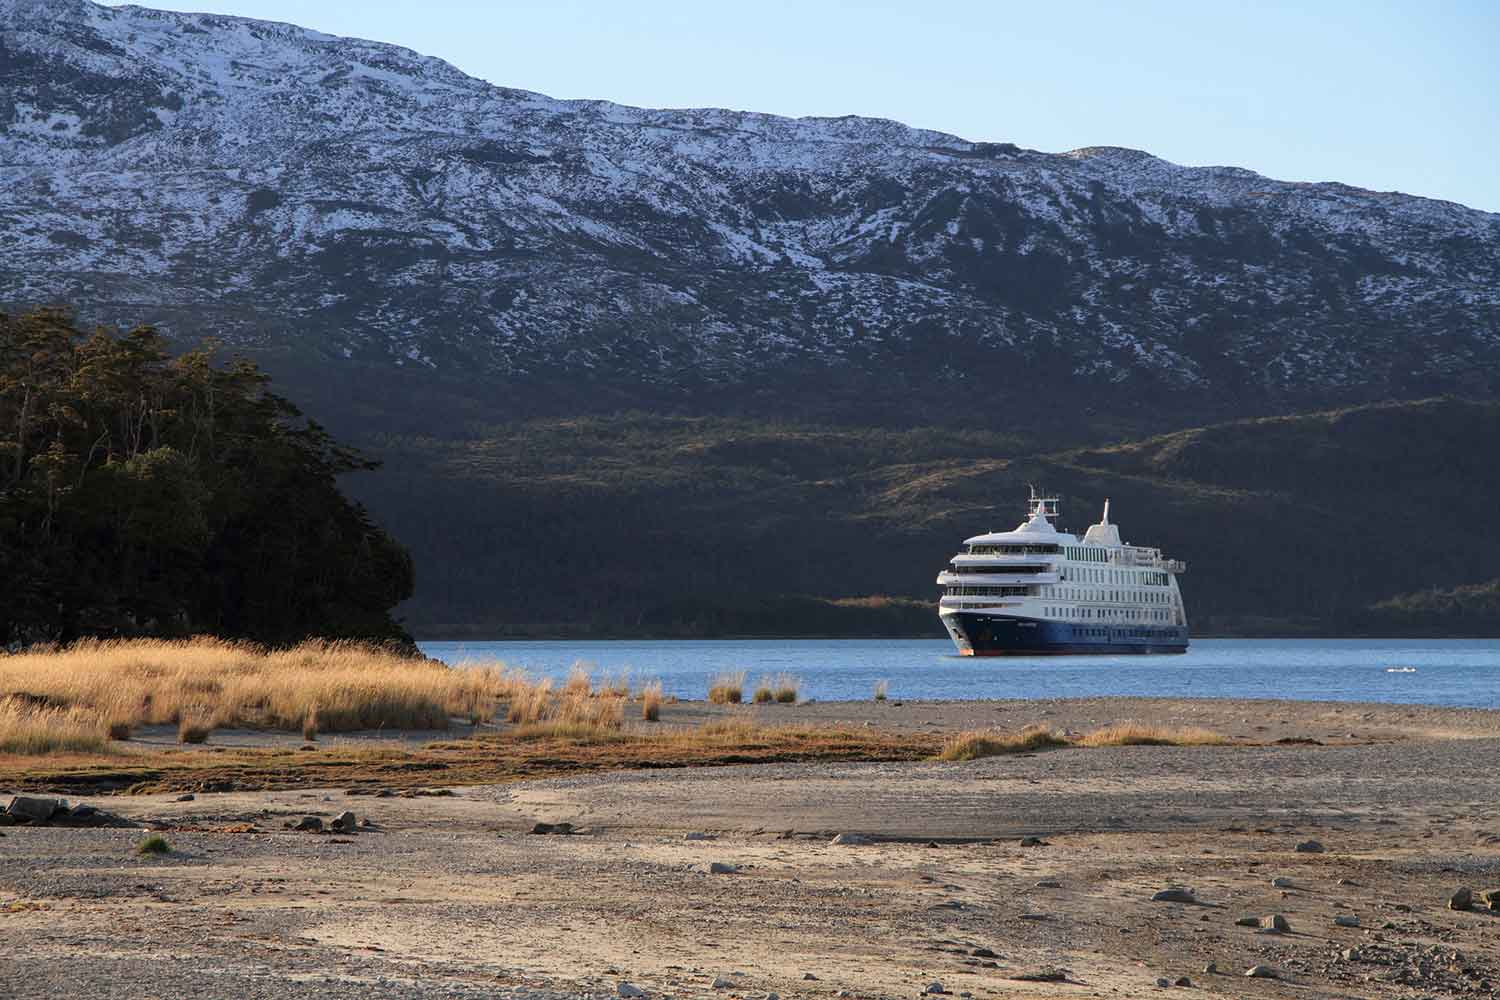 Cruise liner moored up in a barren landscape